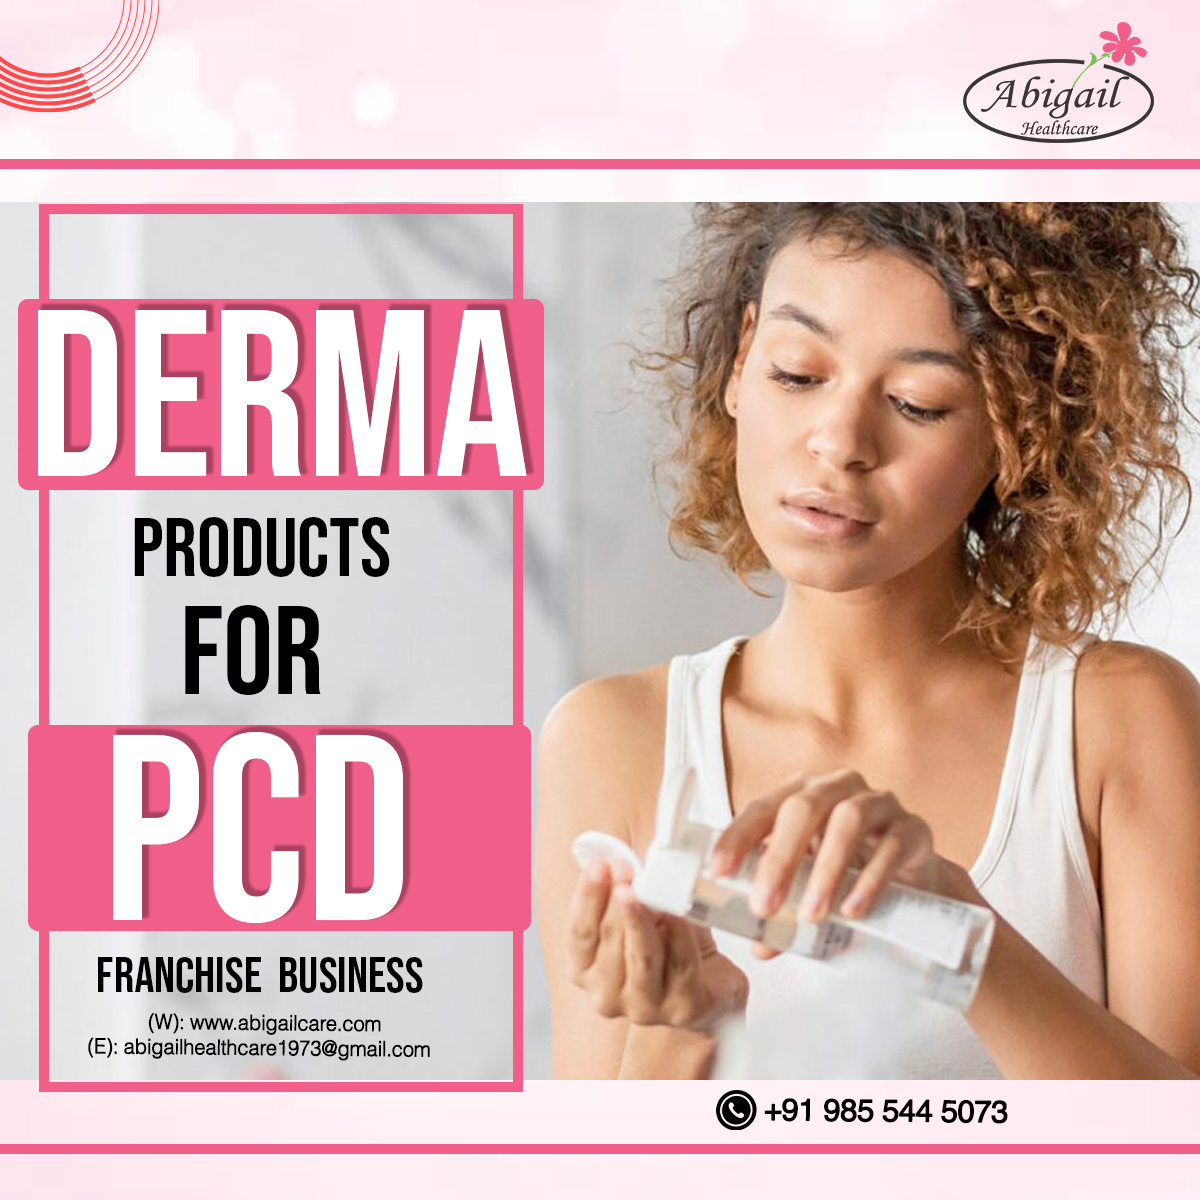 Derma PCD Franchise in Chhattisgarh